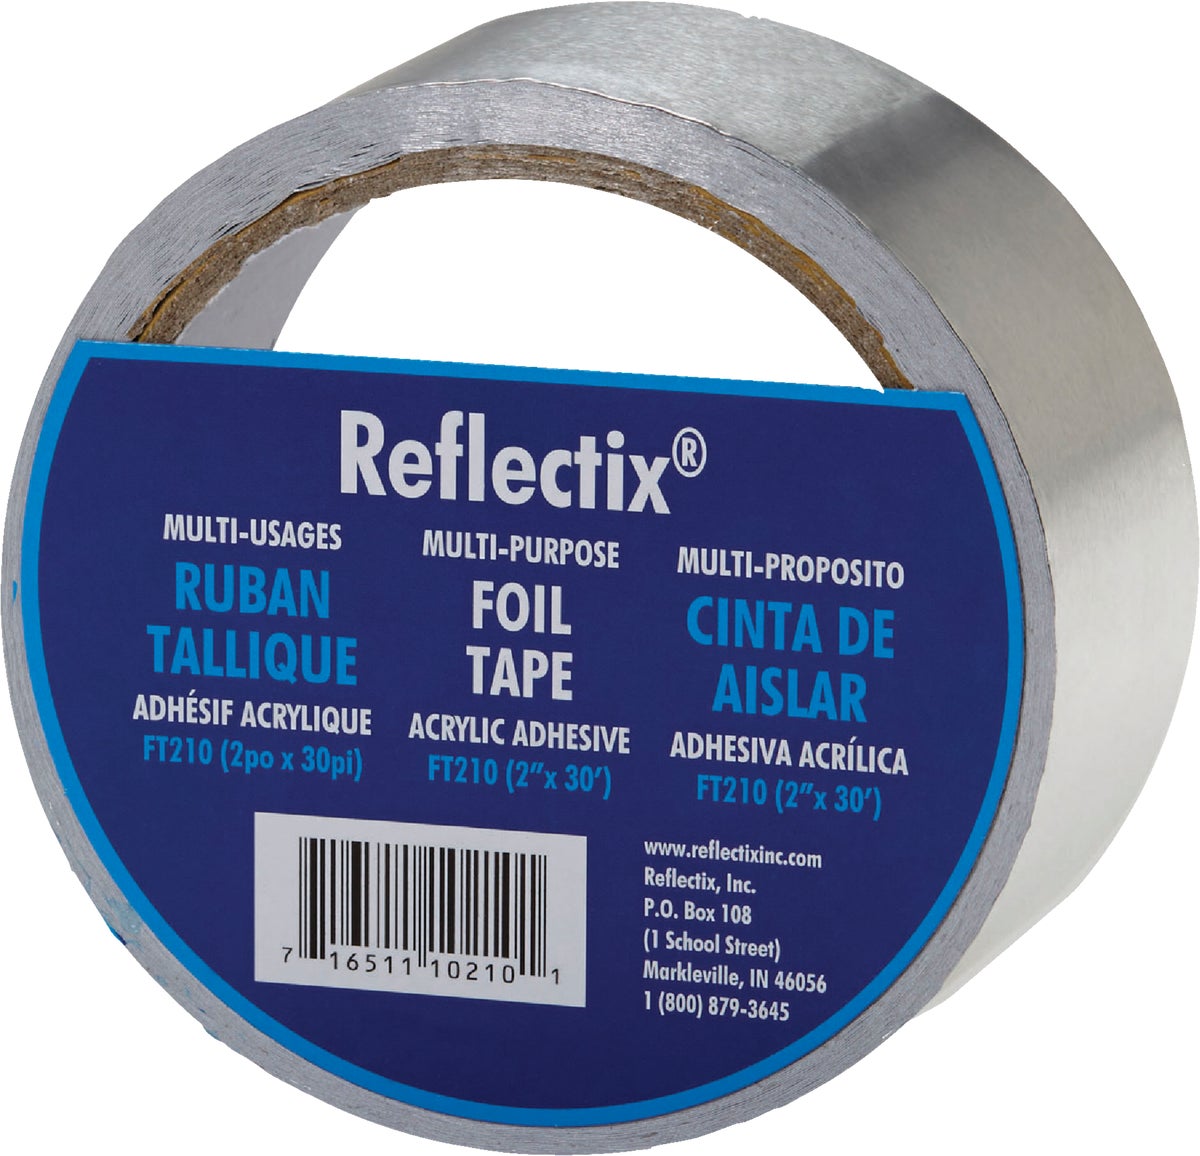 Reflectix Reflective Foil Tape sulation 2 W x 30ft L Roll 5 sqft 